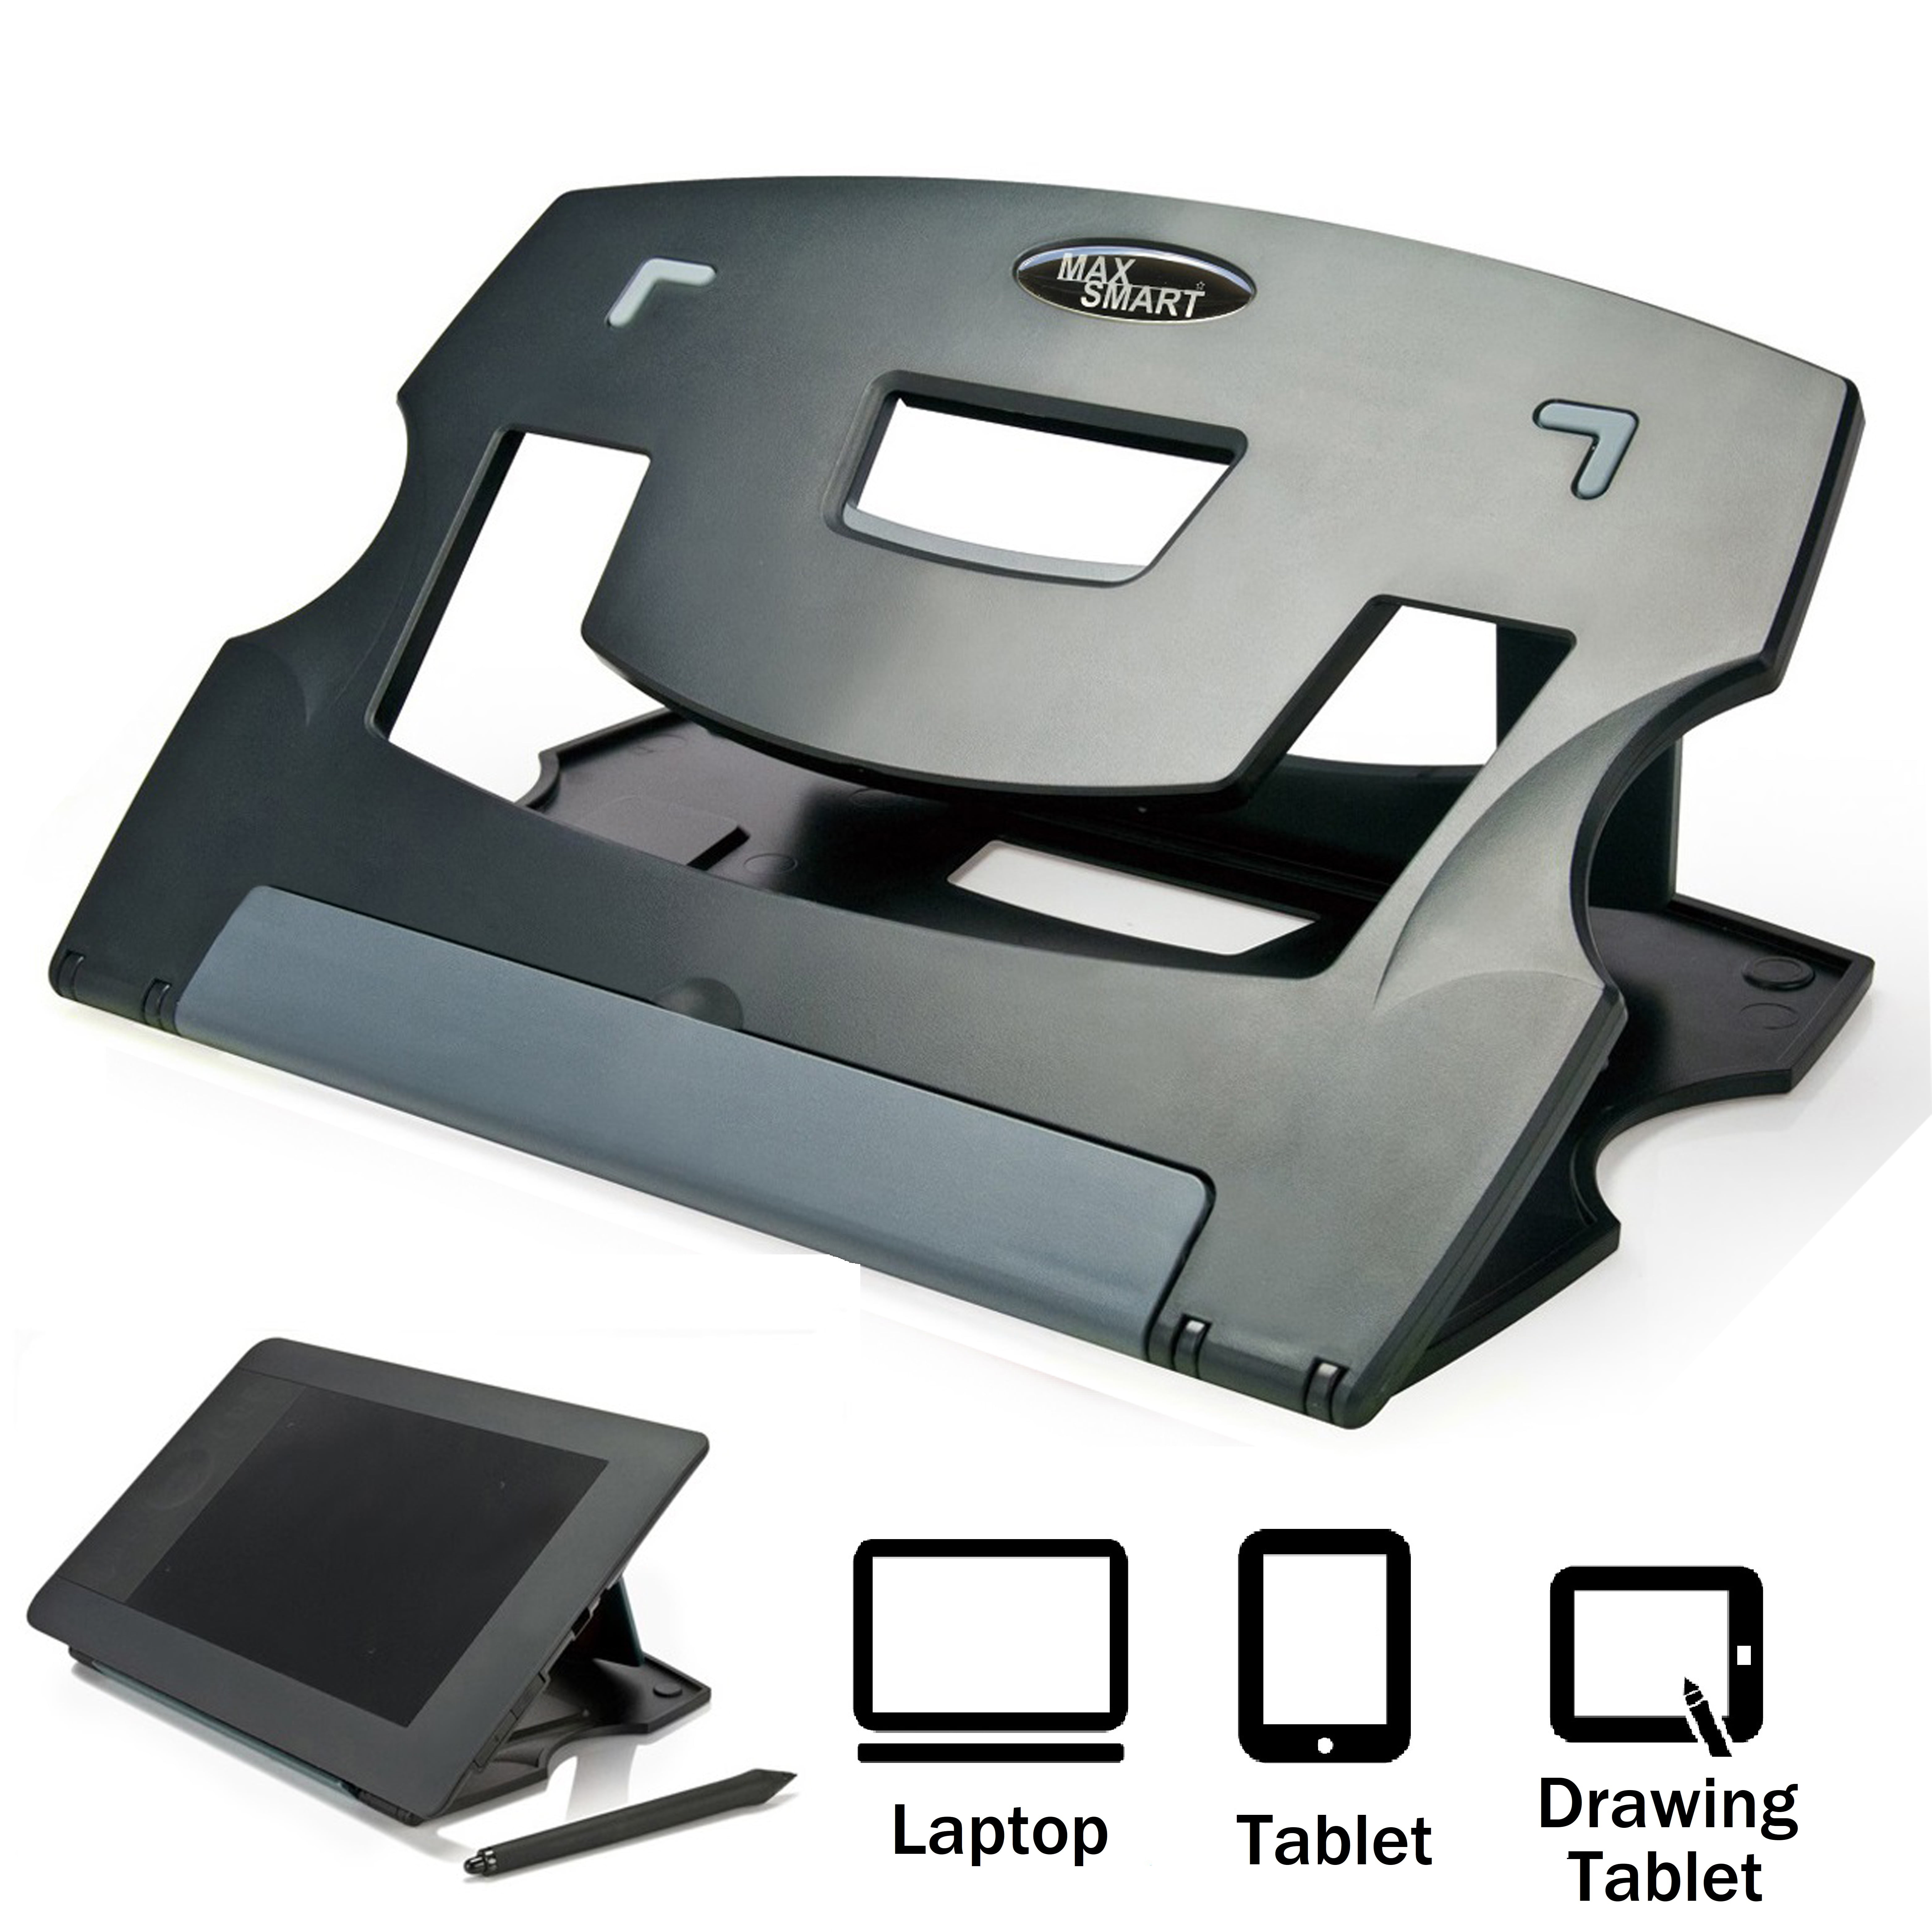 Adjustable Laptop Stand Folding Portable Desktop iPad Holder Office Support UK 